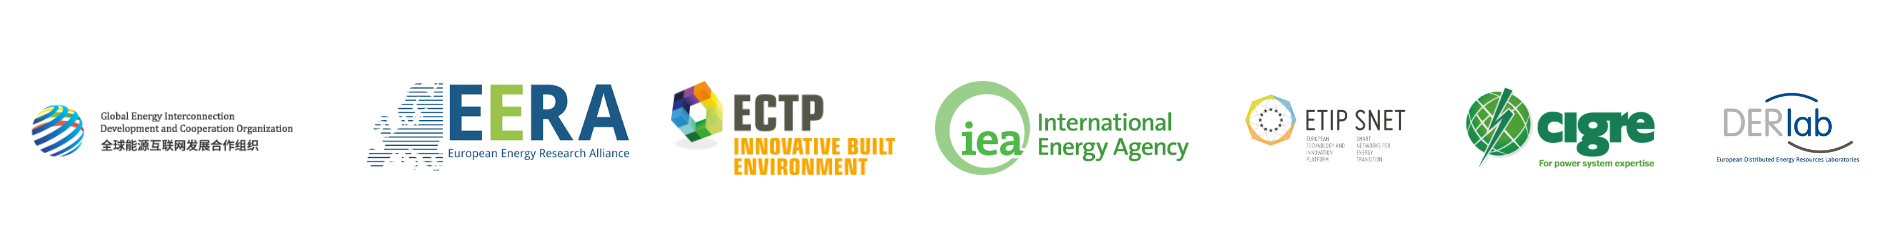 International membership organization logos